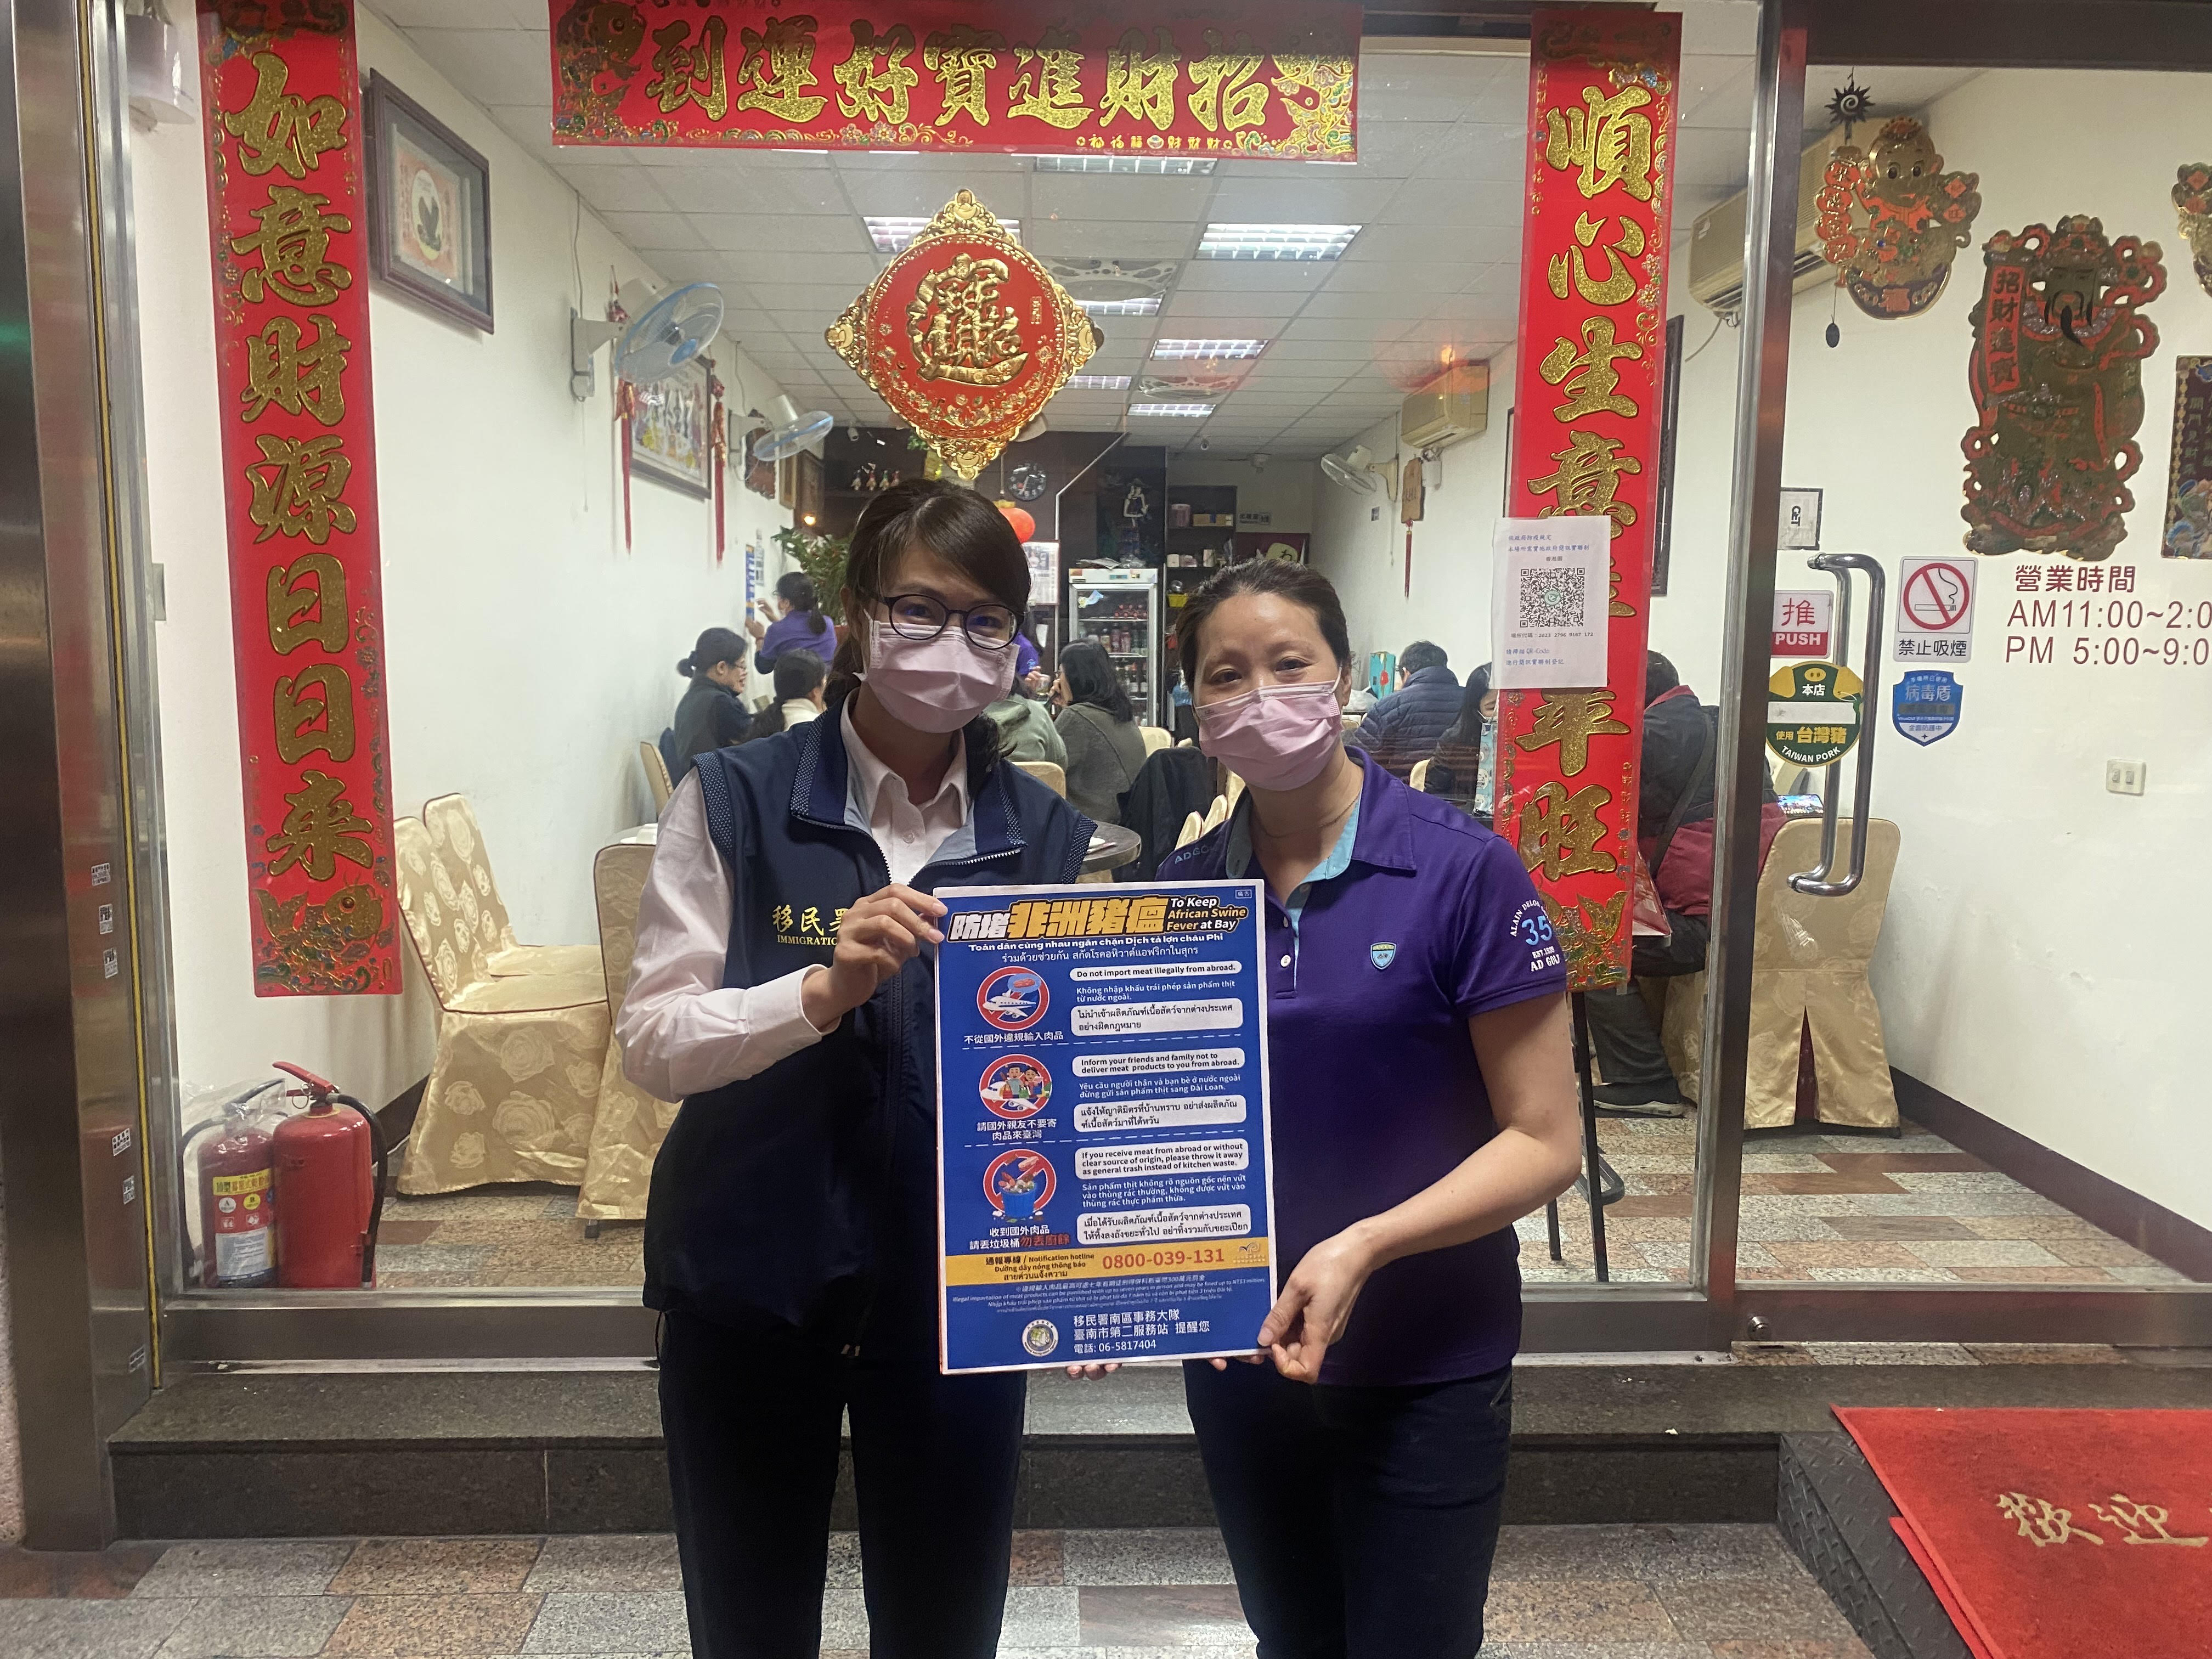 Ms. Yang, seorang penduduk baru yang menjalankan sebuah restoran di Tainan, sangat mendesak pelanggan untuk tidak mengirim produk daging babi dari luar negeri ke Taiwan. Sumber: Stasiun Layanan Kedua Kota Tainan